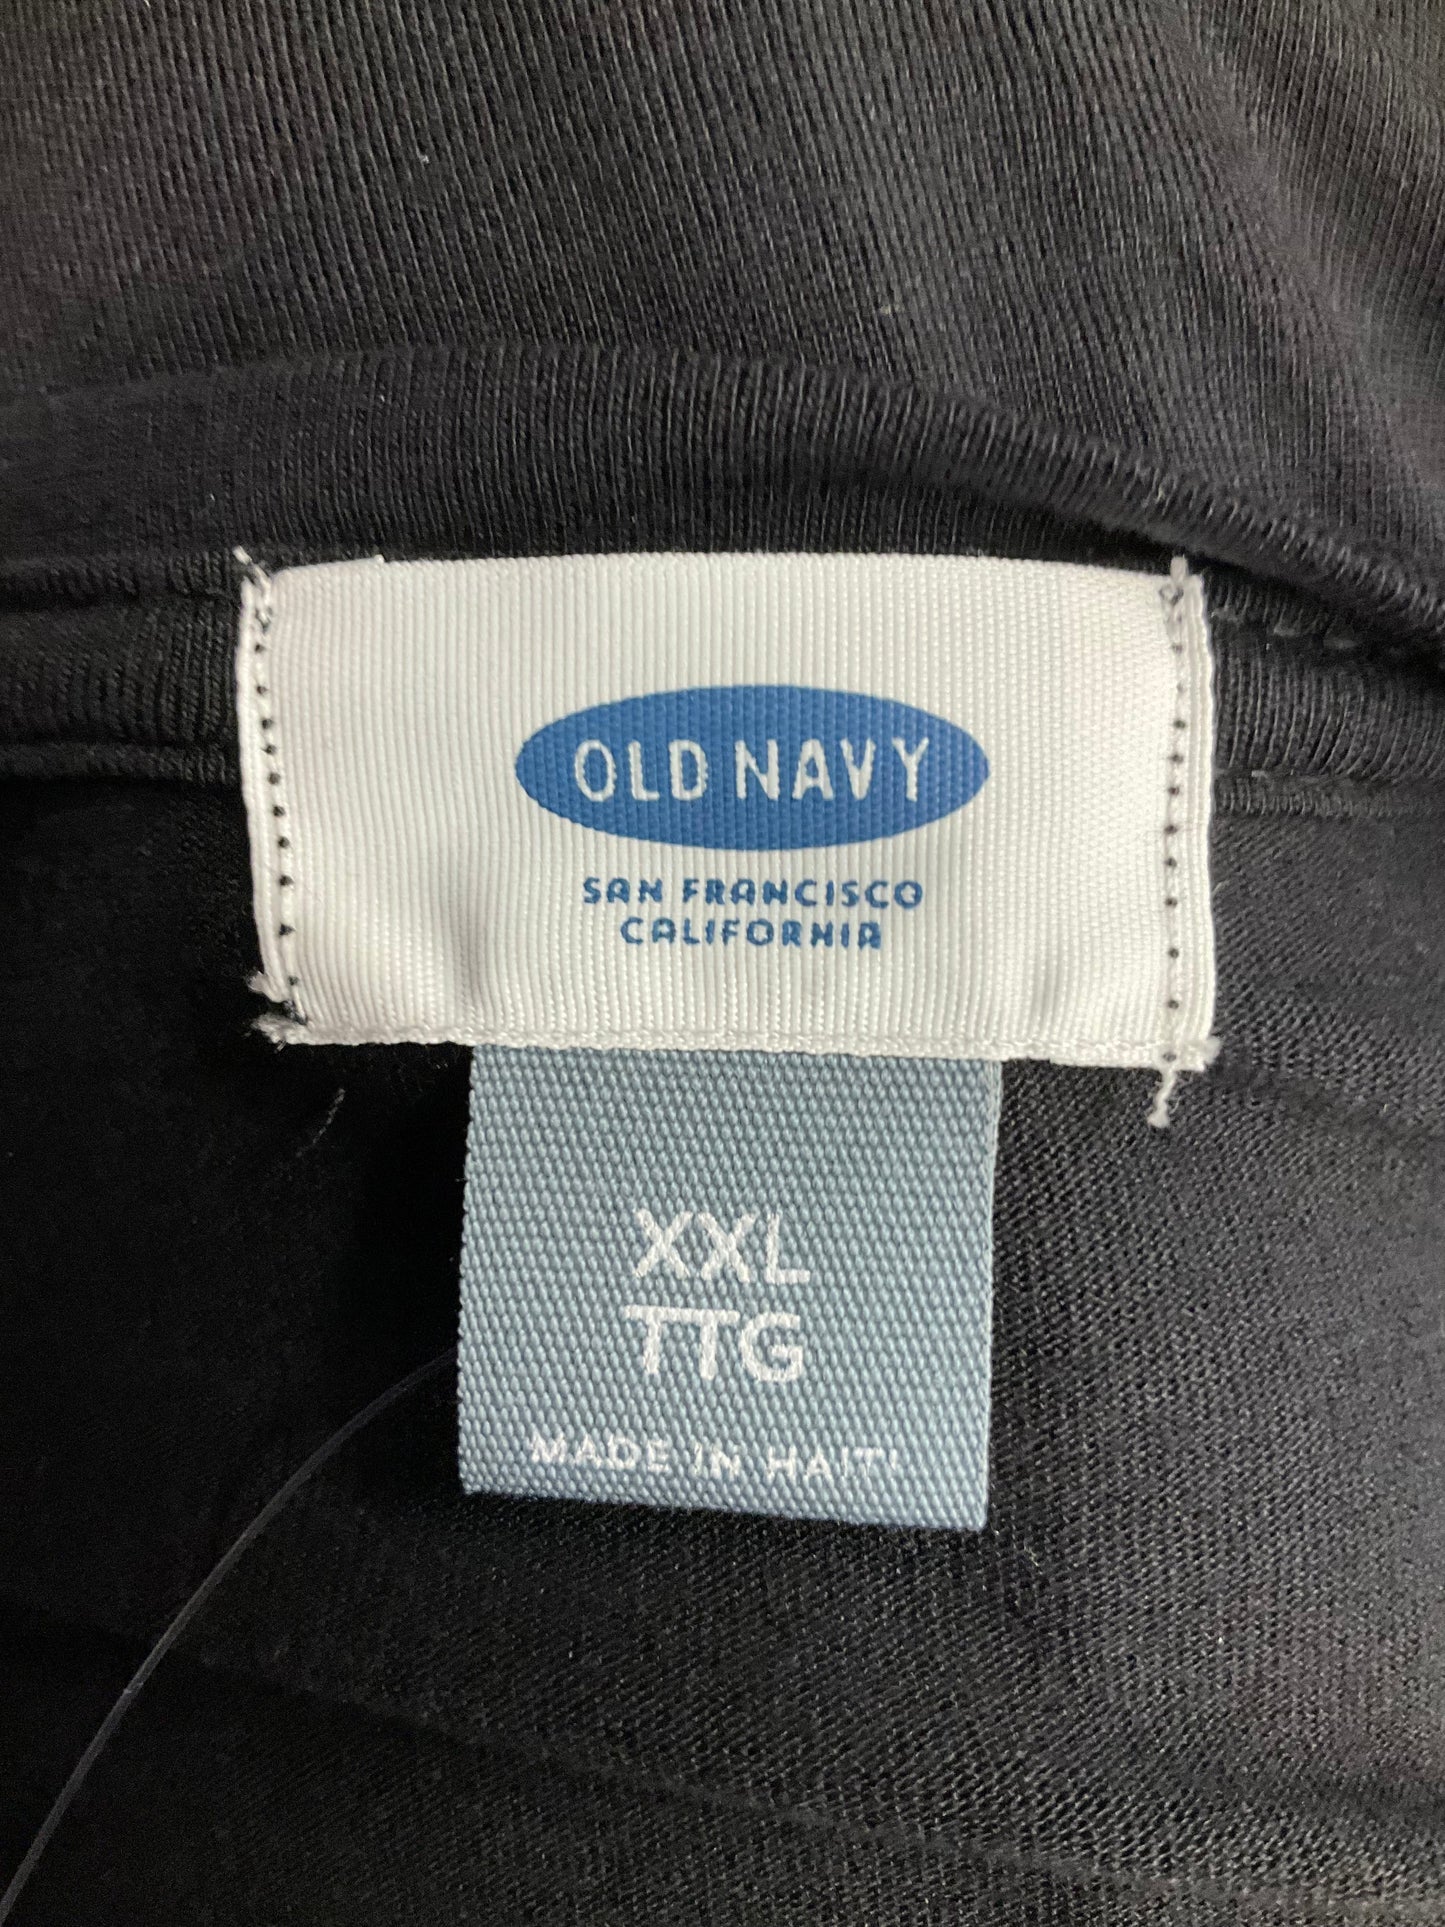 Black Top Short Sleeve Basic Old Navy, Size 2x